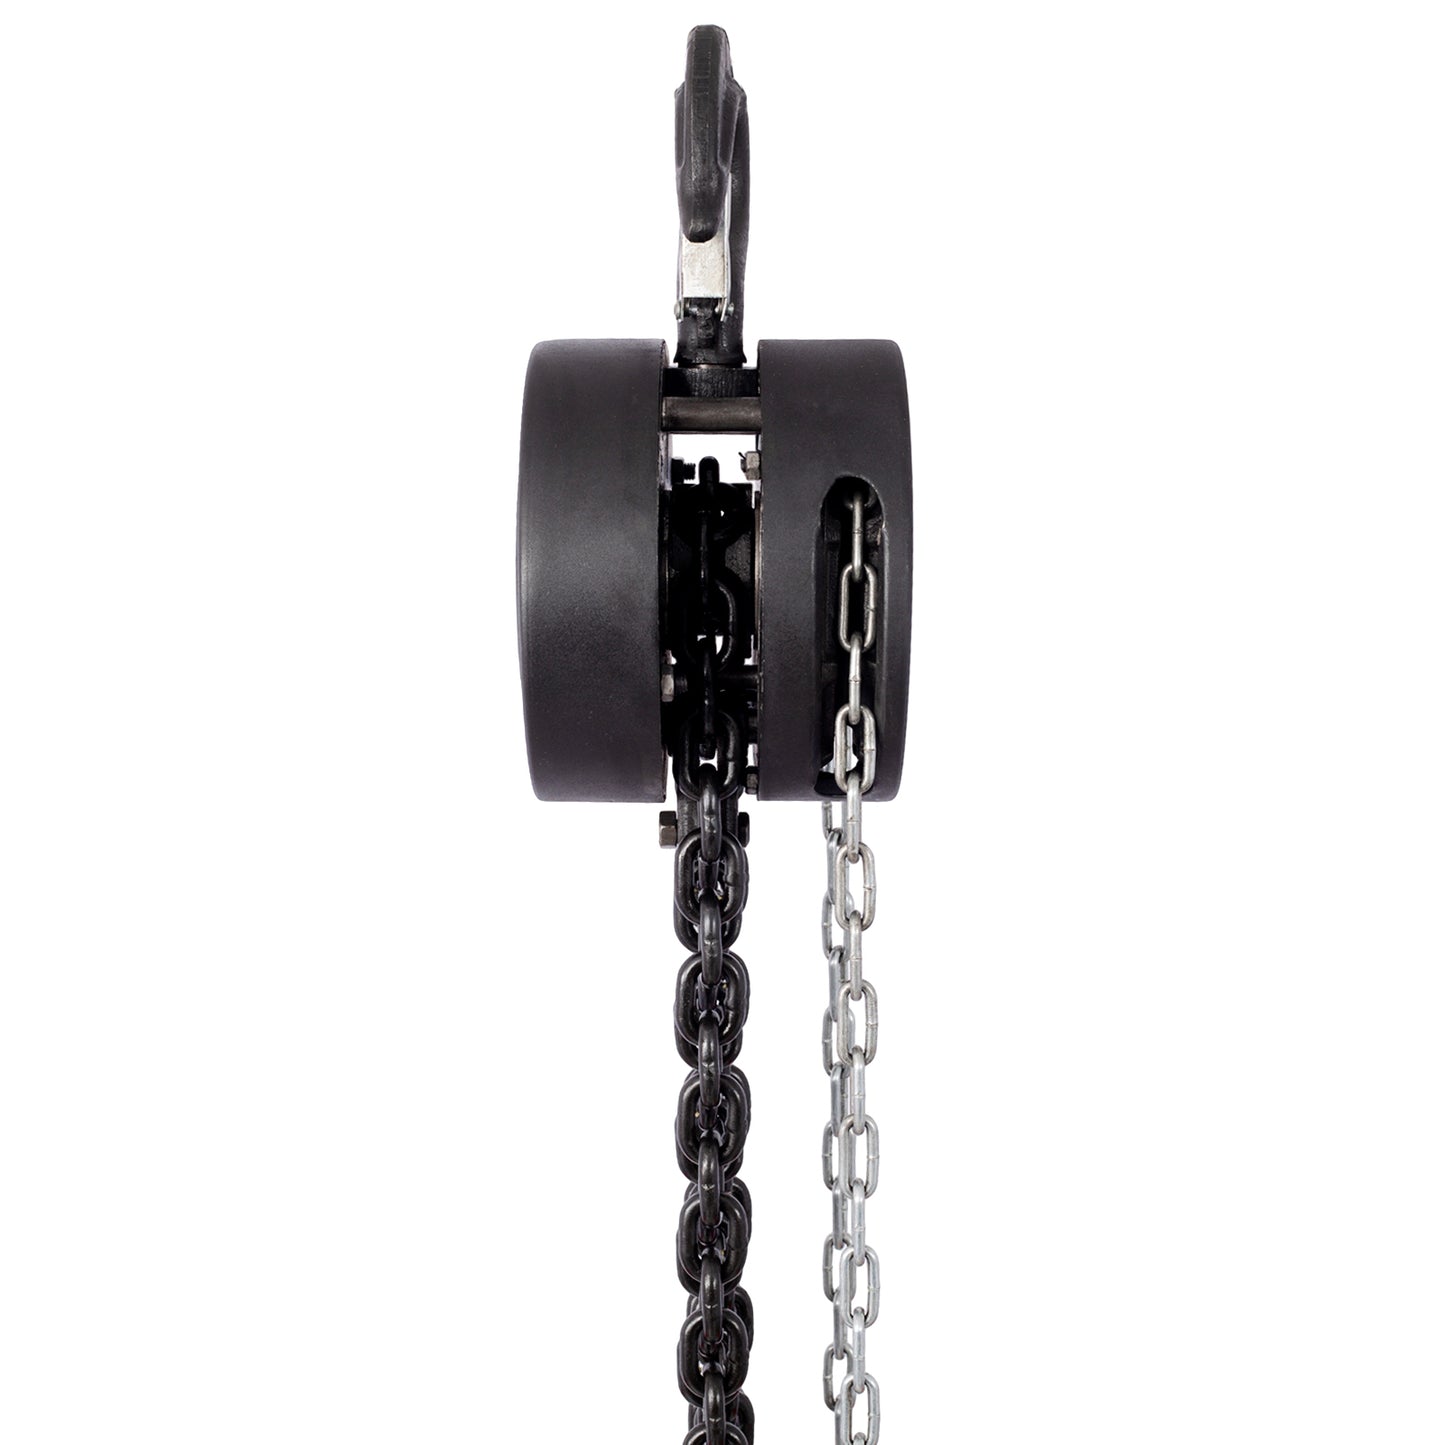 Chain hoist 11000lbs 5T capacity 10ft wIth 2 heavy duty hooks,Manual chain hoist steel construction,Black